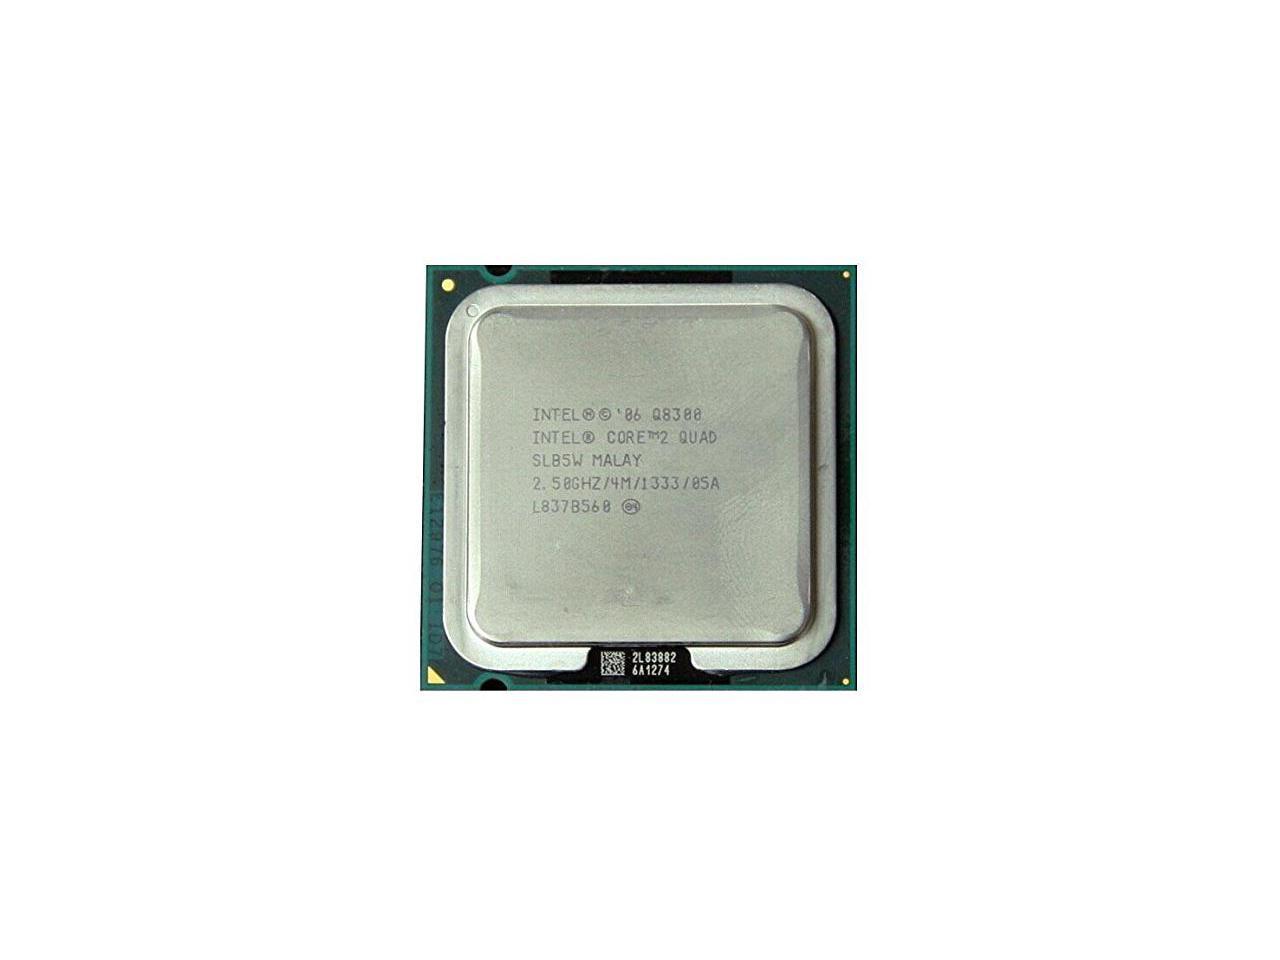 Intel Q8300 Core Quad Processor BX80580Q8300 SLGUR LGA775 by Intel 並 